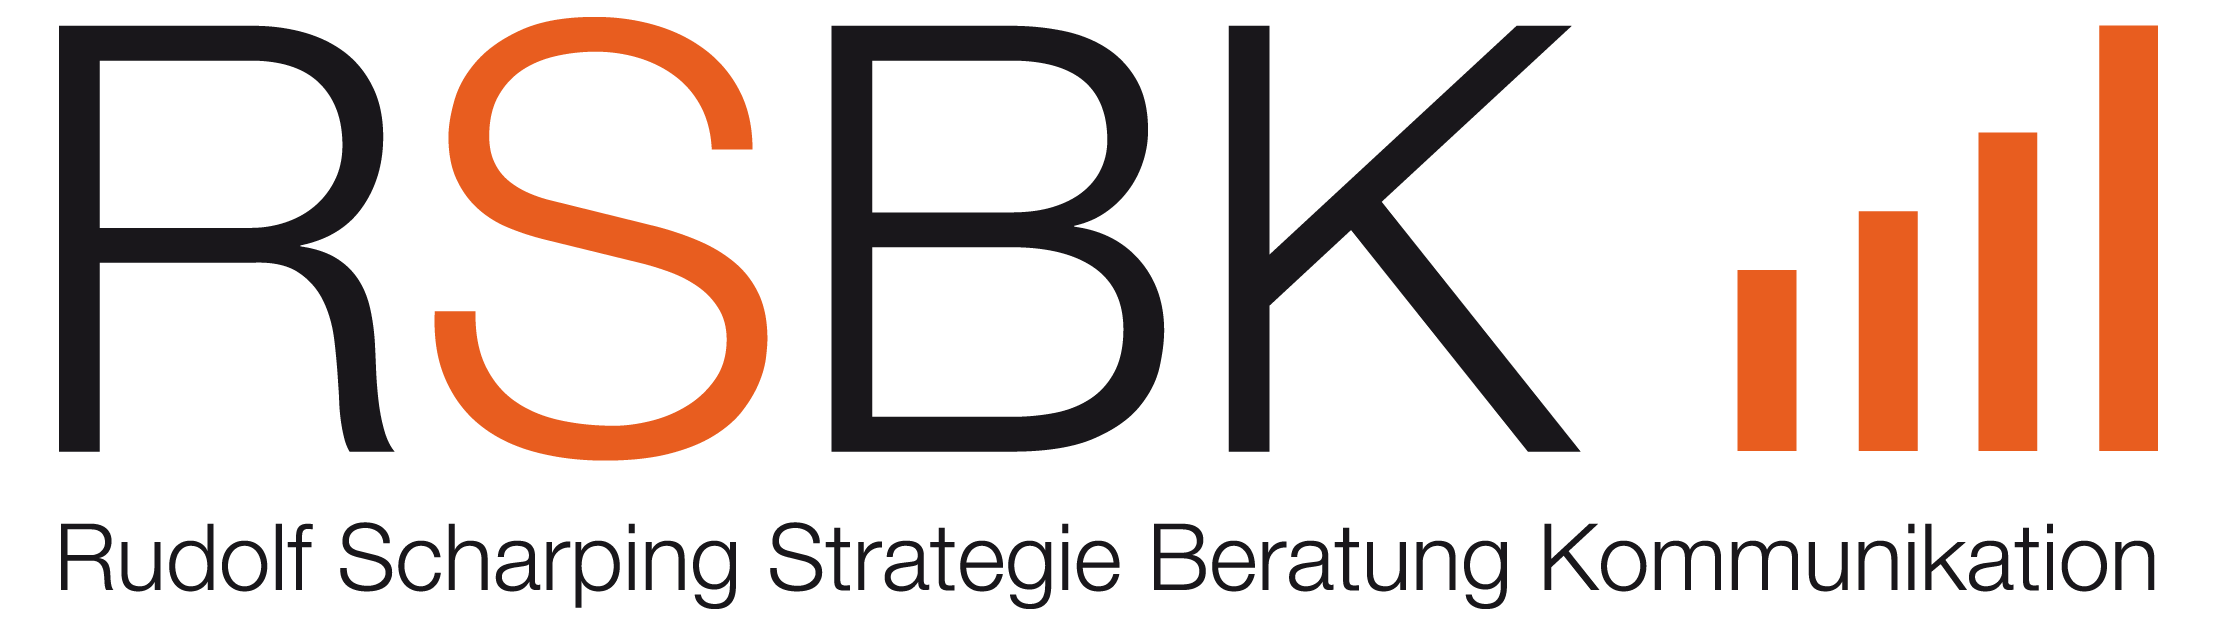 RSBK Strategie Beratung Kommunikation AG